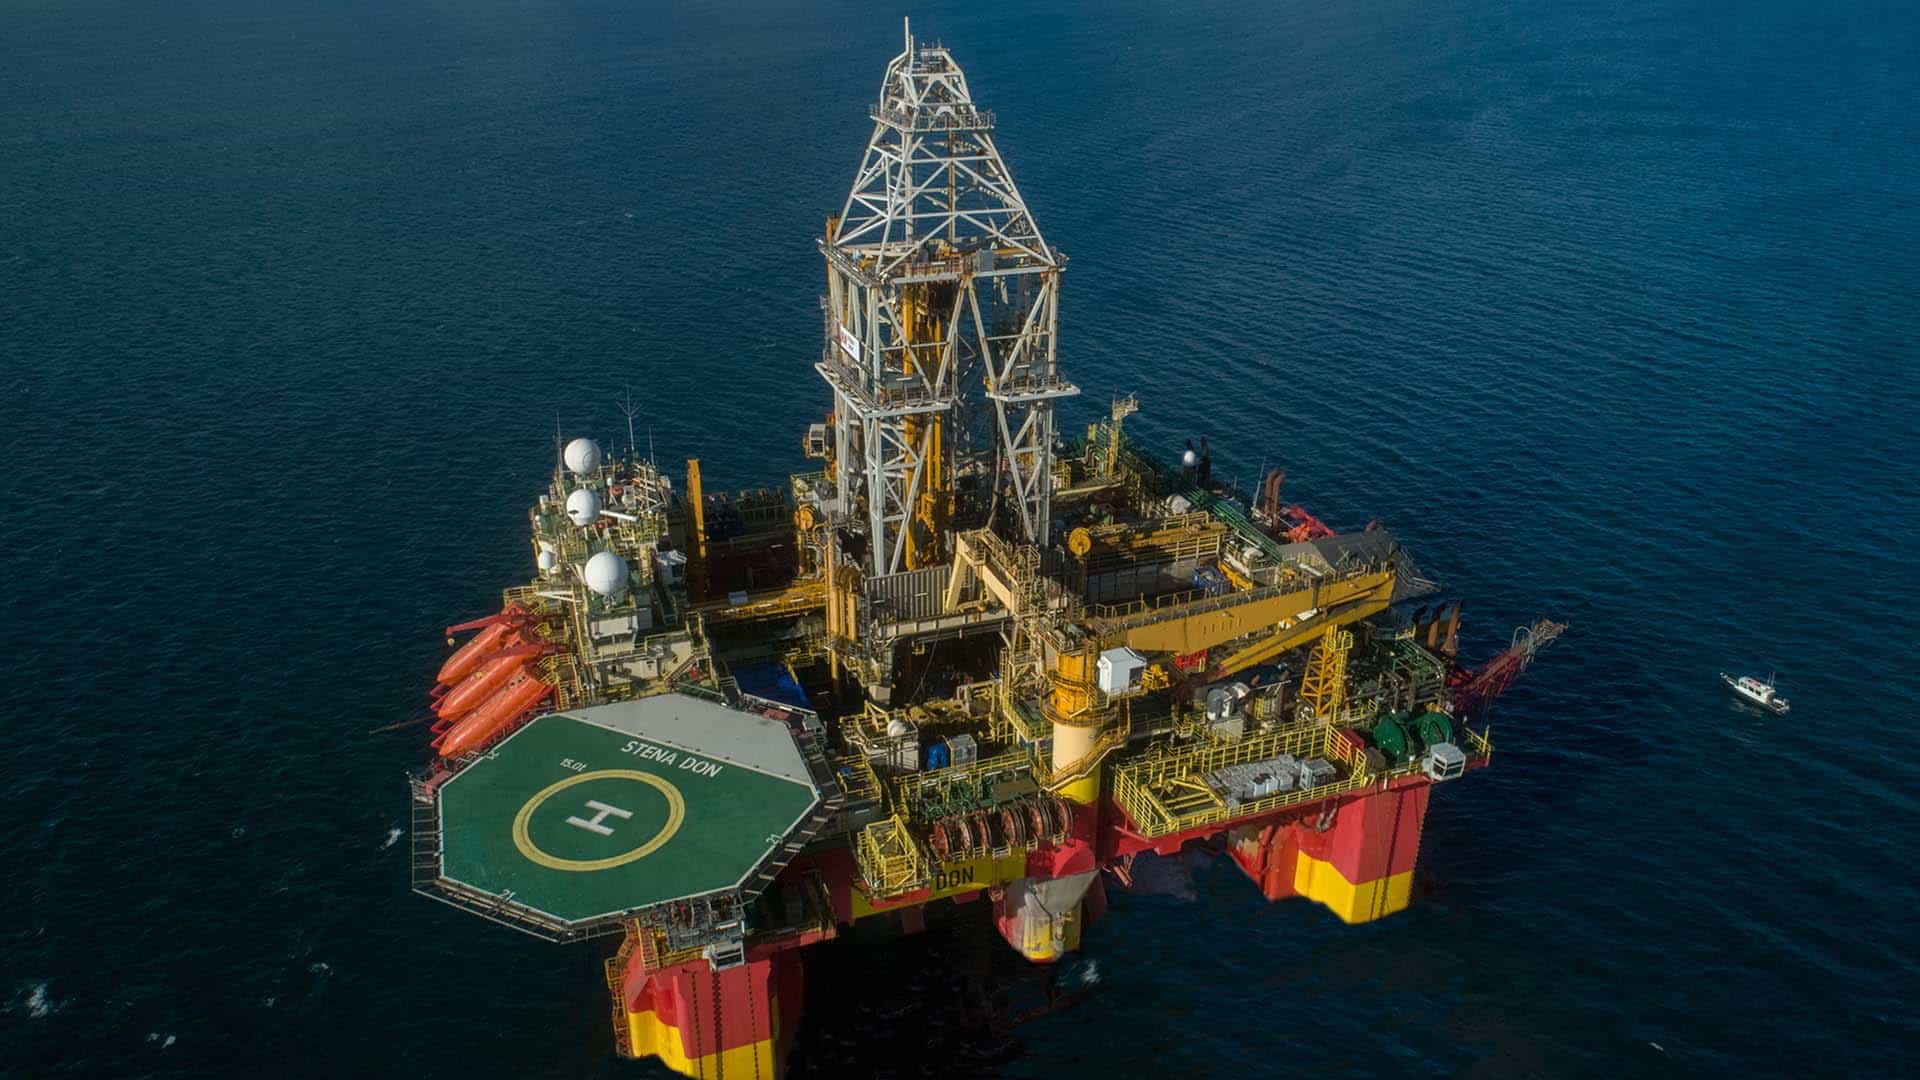 Stena rig spuds UK player’s North Sea asset